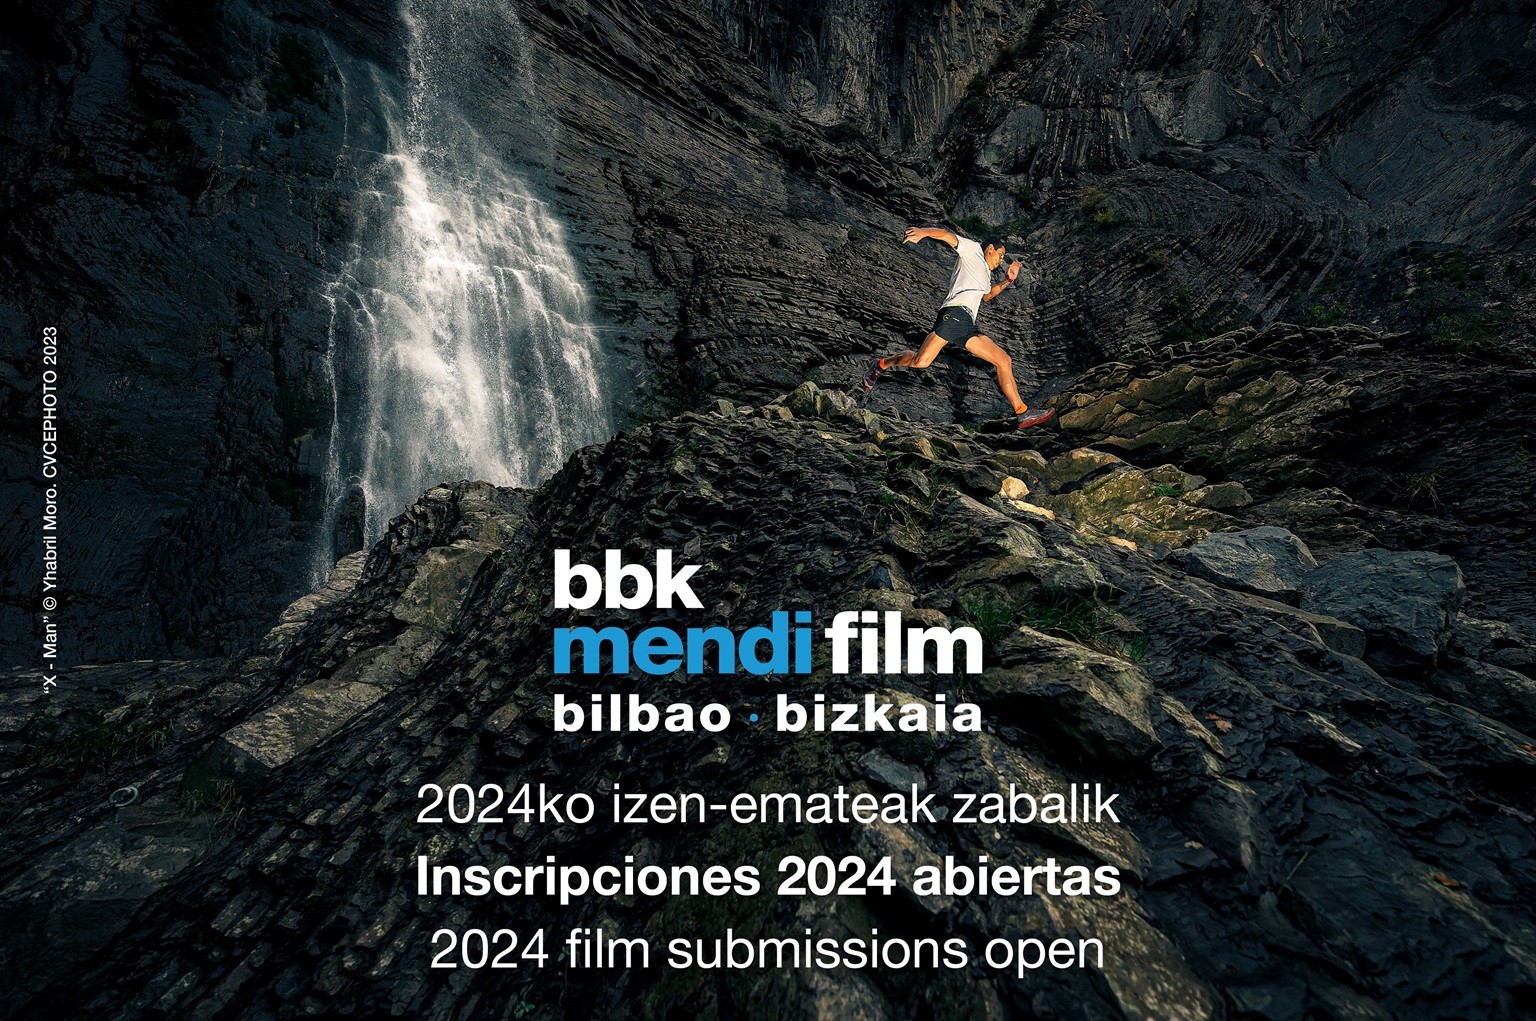 Film submission period for the BBK Mendi Film Bilbao - Bizkaia 2024 open until 15th of September